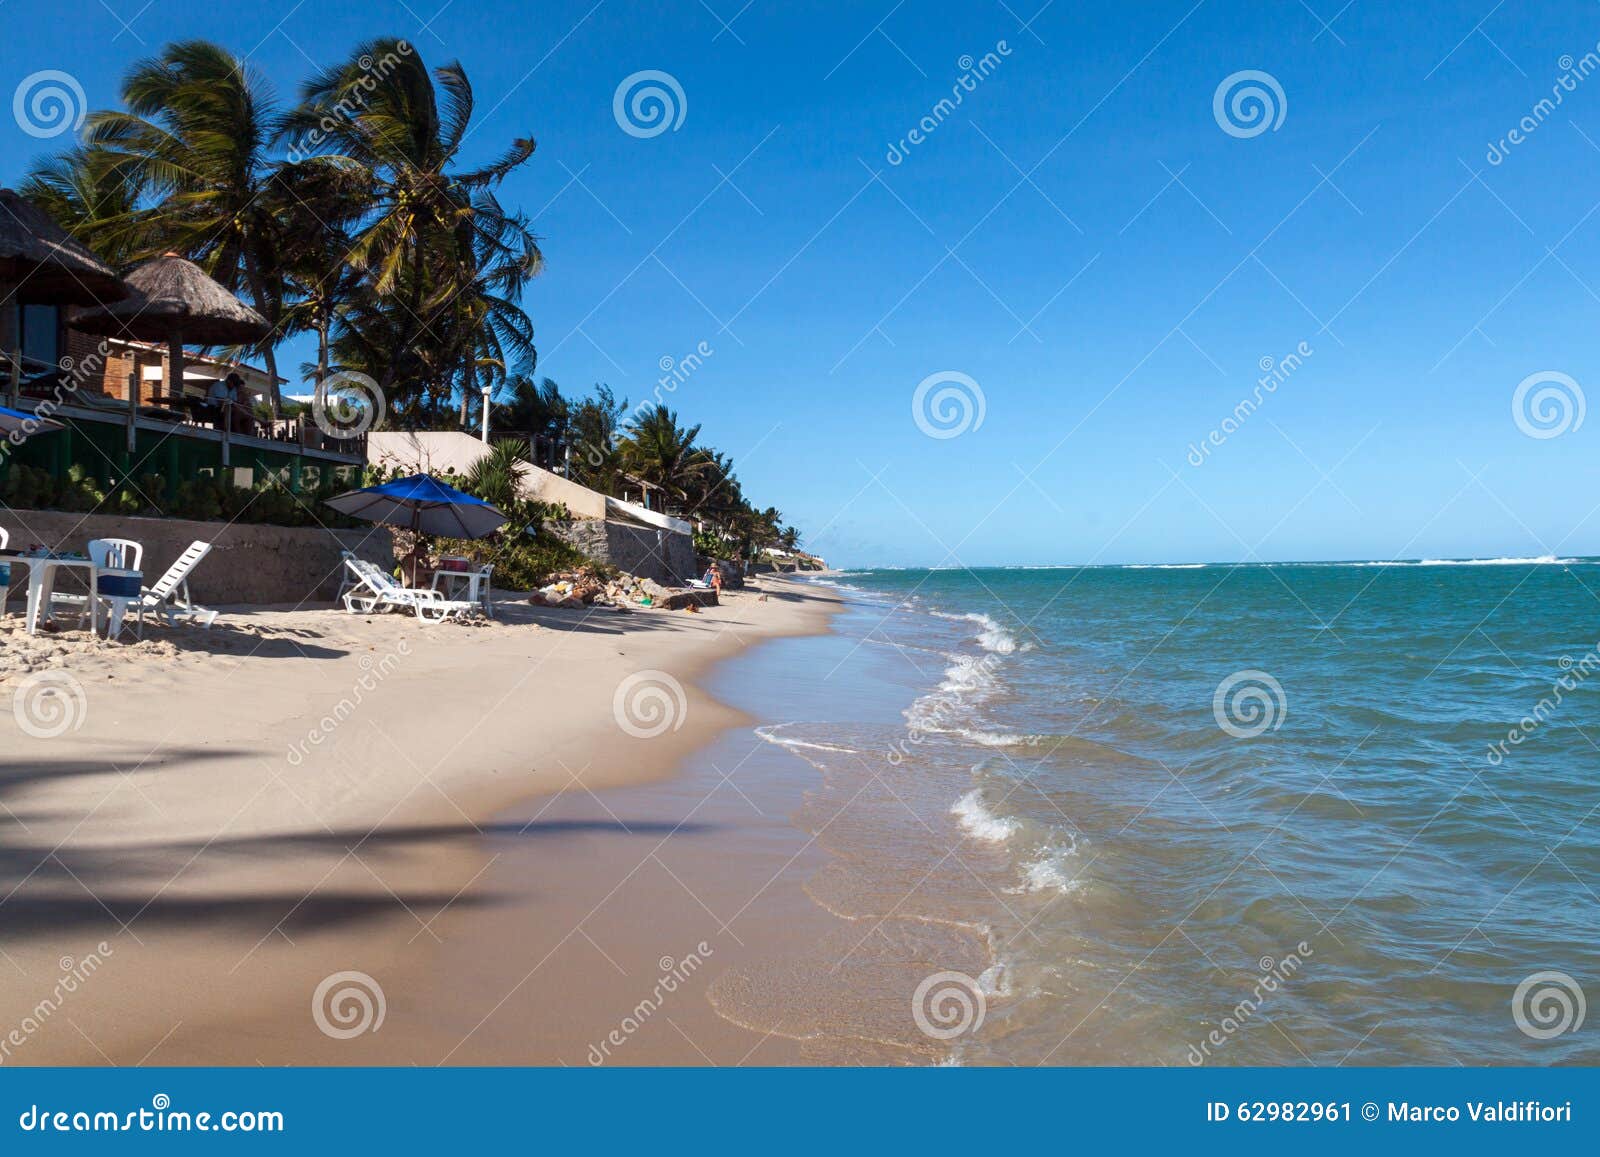 praia do frances, brazil